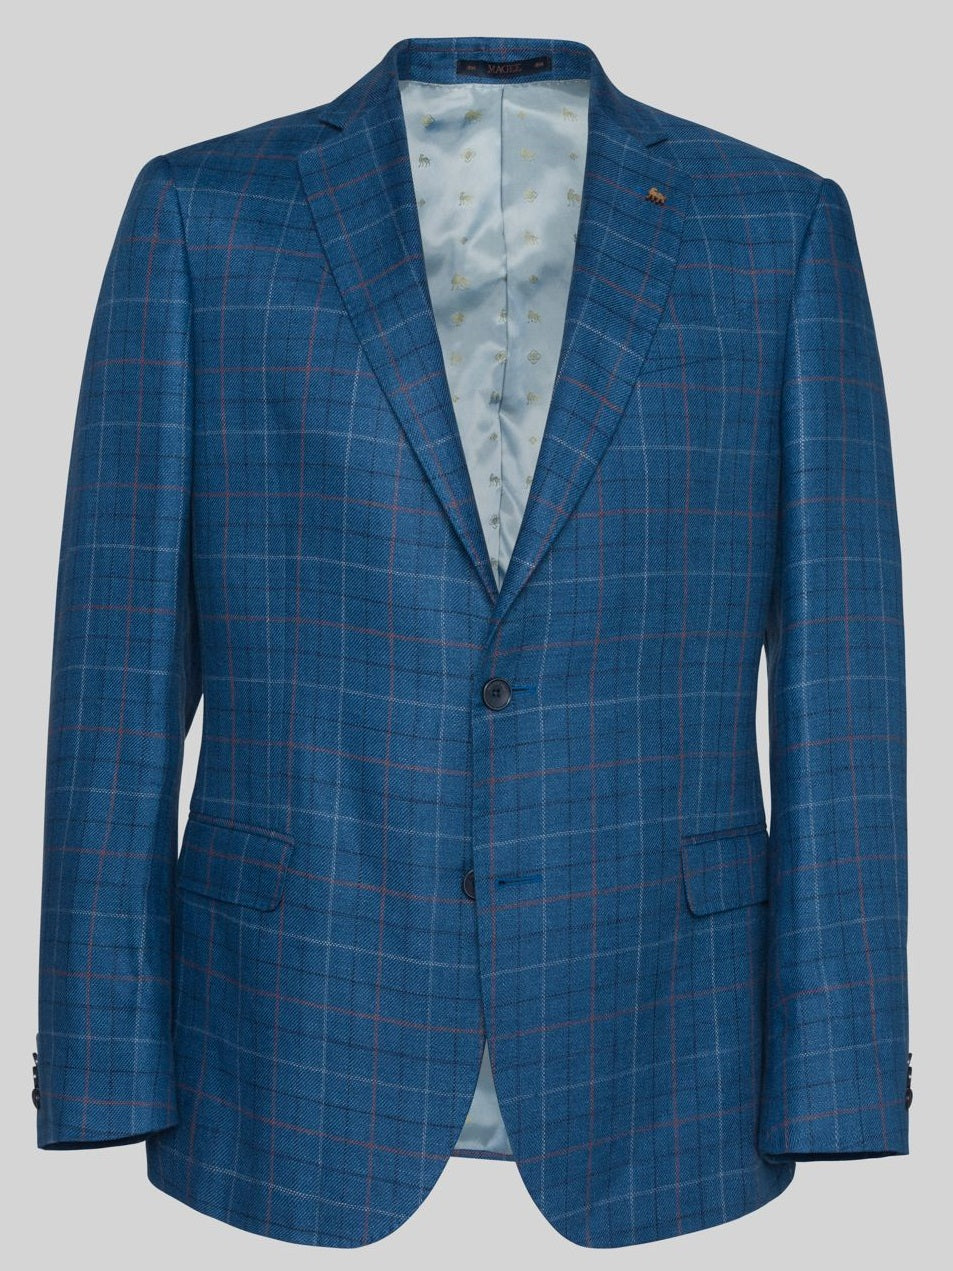 MAGEE Irish Linen Jacket - Mens Liffey - Blue With Tangerine, White & Navy Check